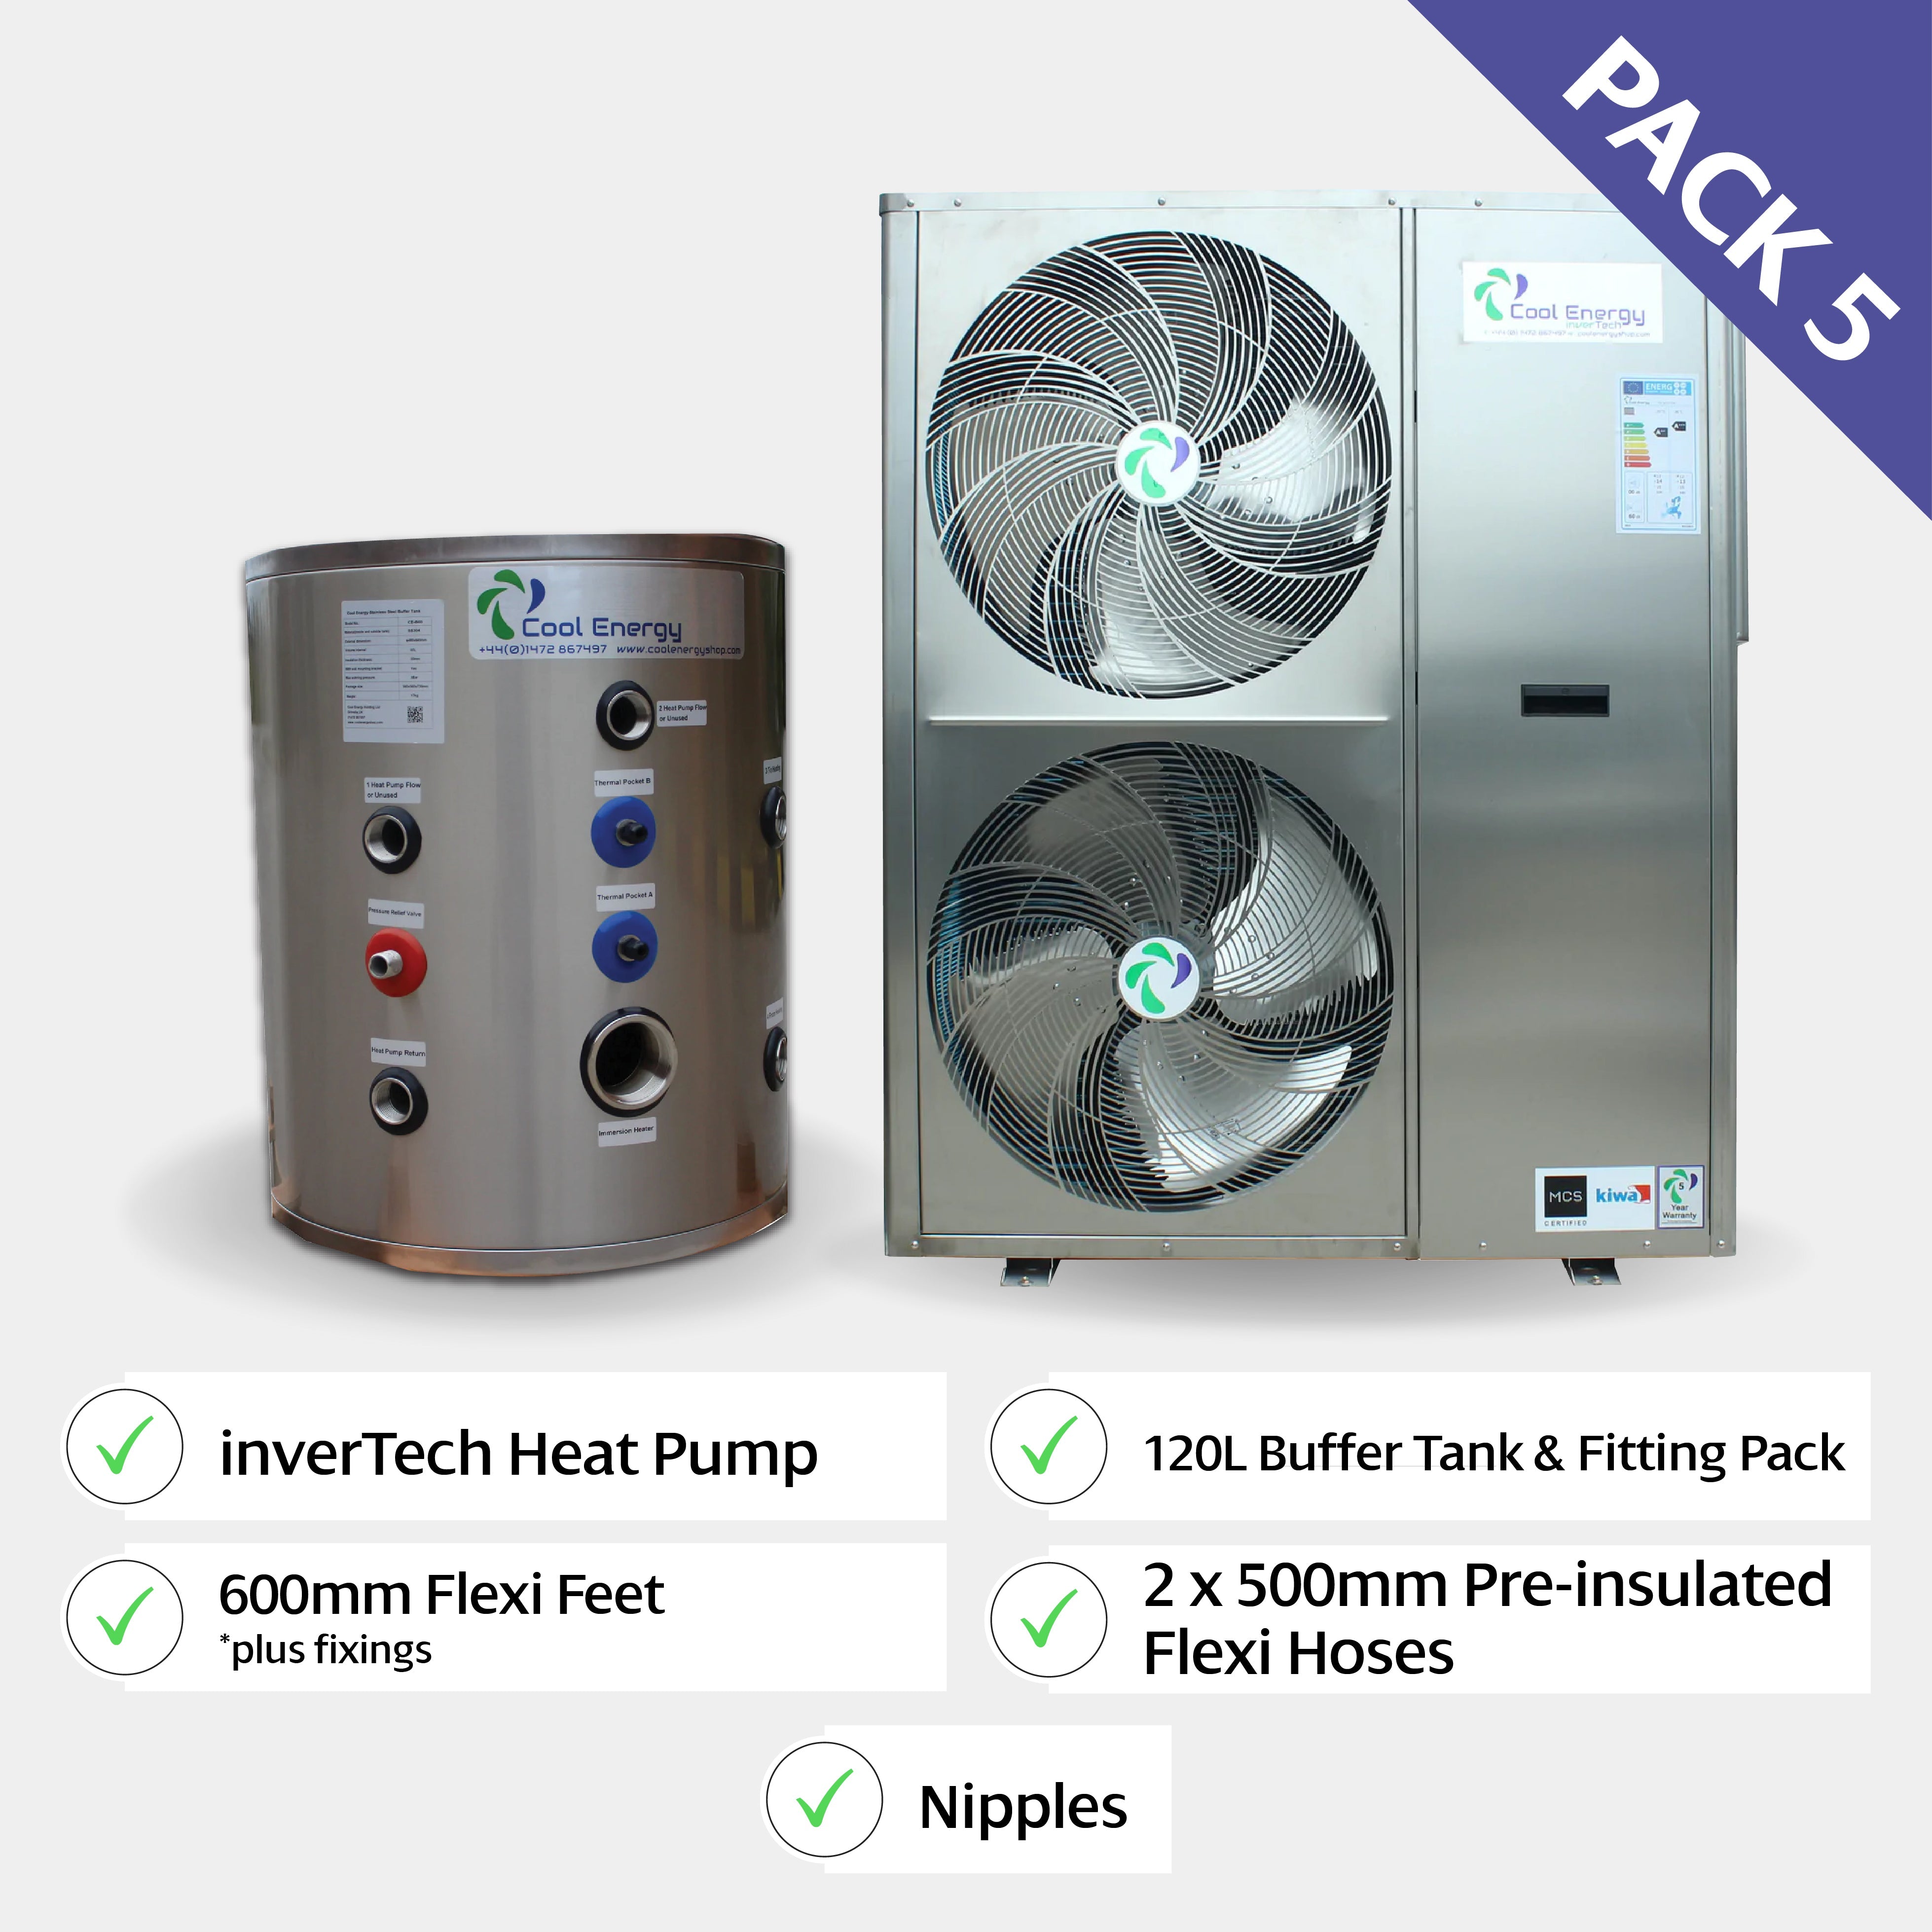 Cool Energy inverTech Heat Pump Package (Pack 5) - Heat Pump Packages - Cool Energy Shop